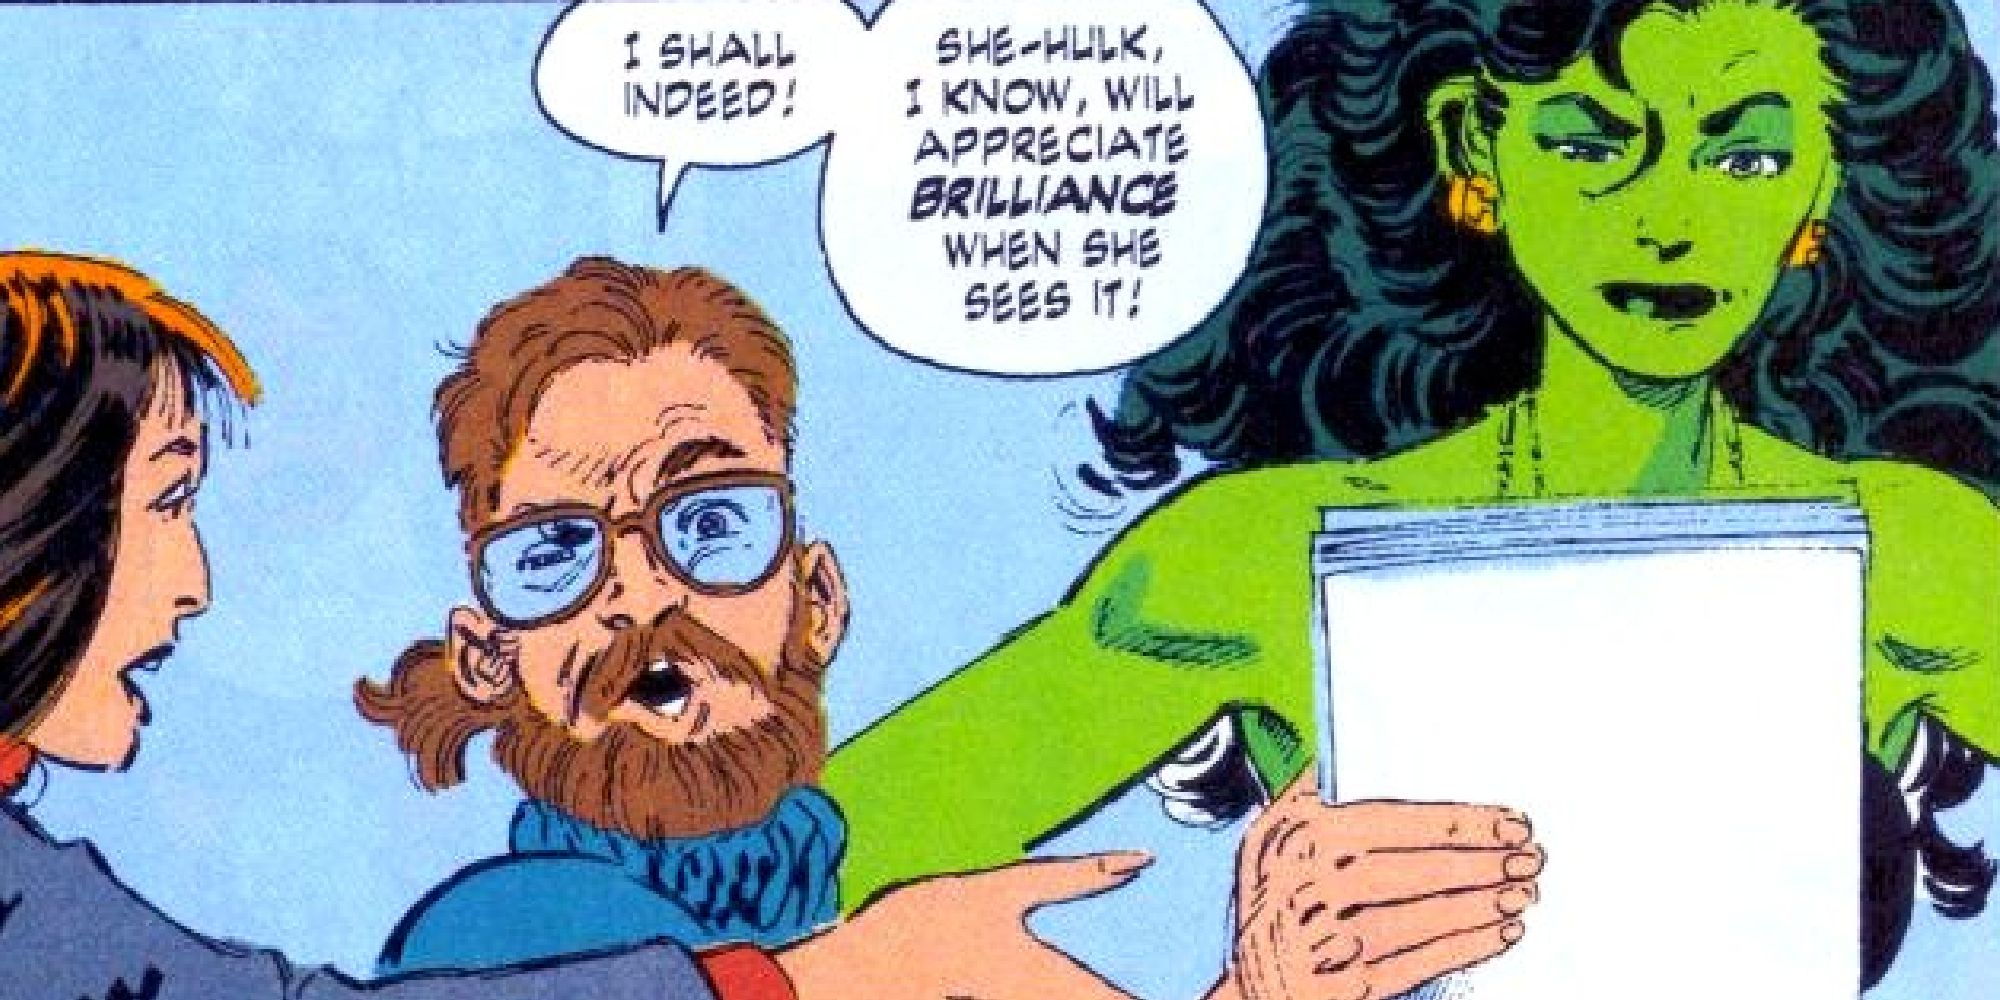 John Byrne handing She-Hulk a comic manuscript in the comics